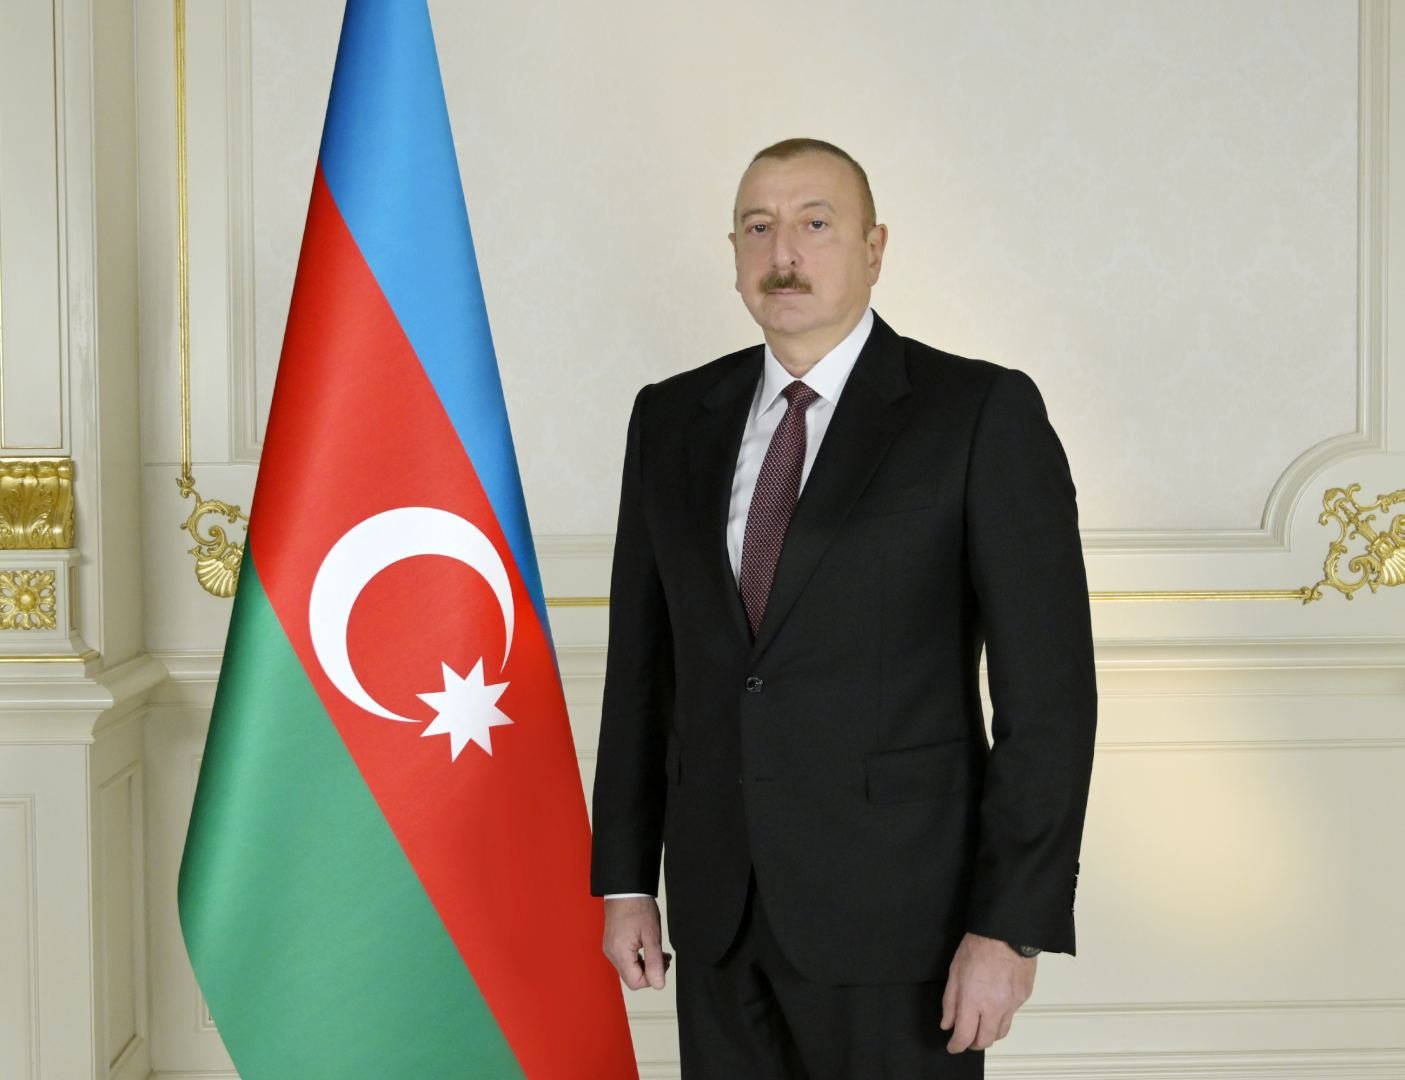 Проходит встреча Президента Ильхама Алиева и премьер-министра Болгарии Кирилла Петкова в формате один на один